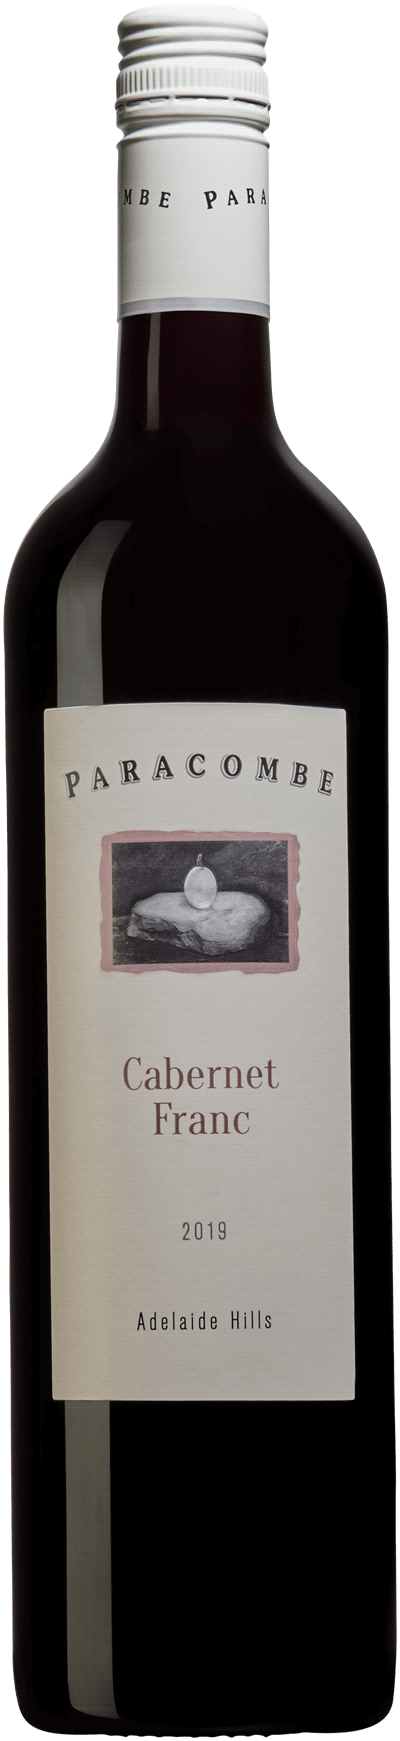 Paracombe Cabernet Franc, 2019